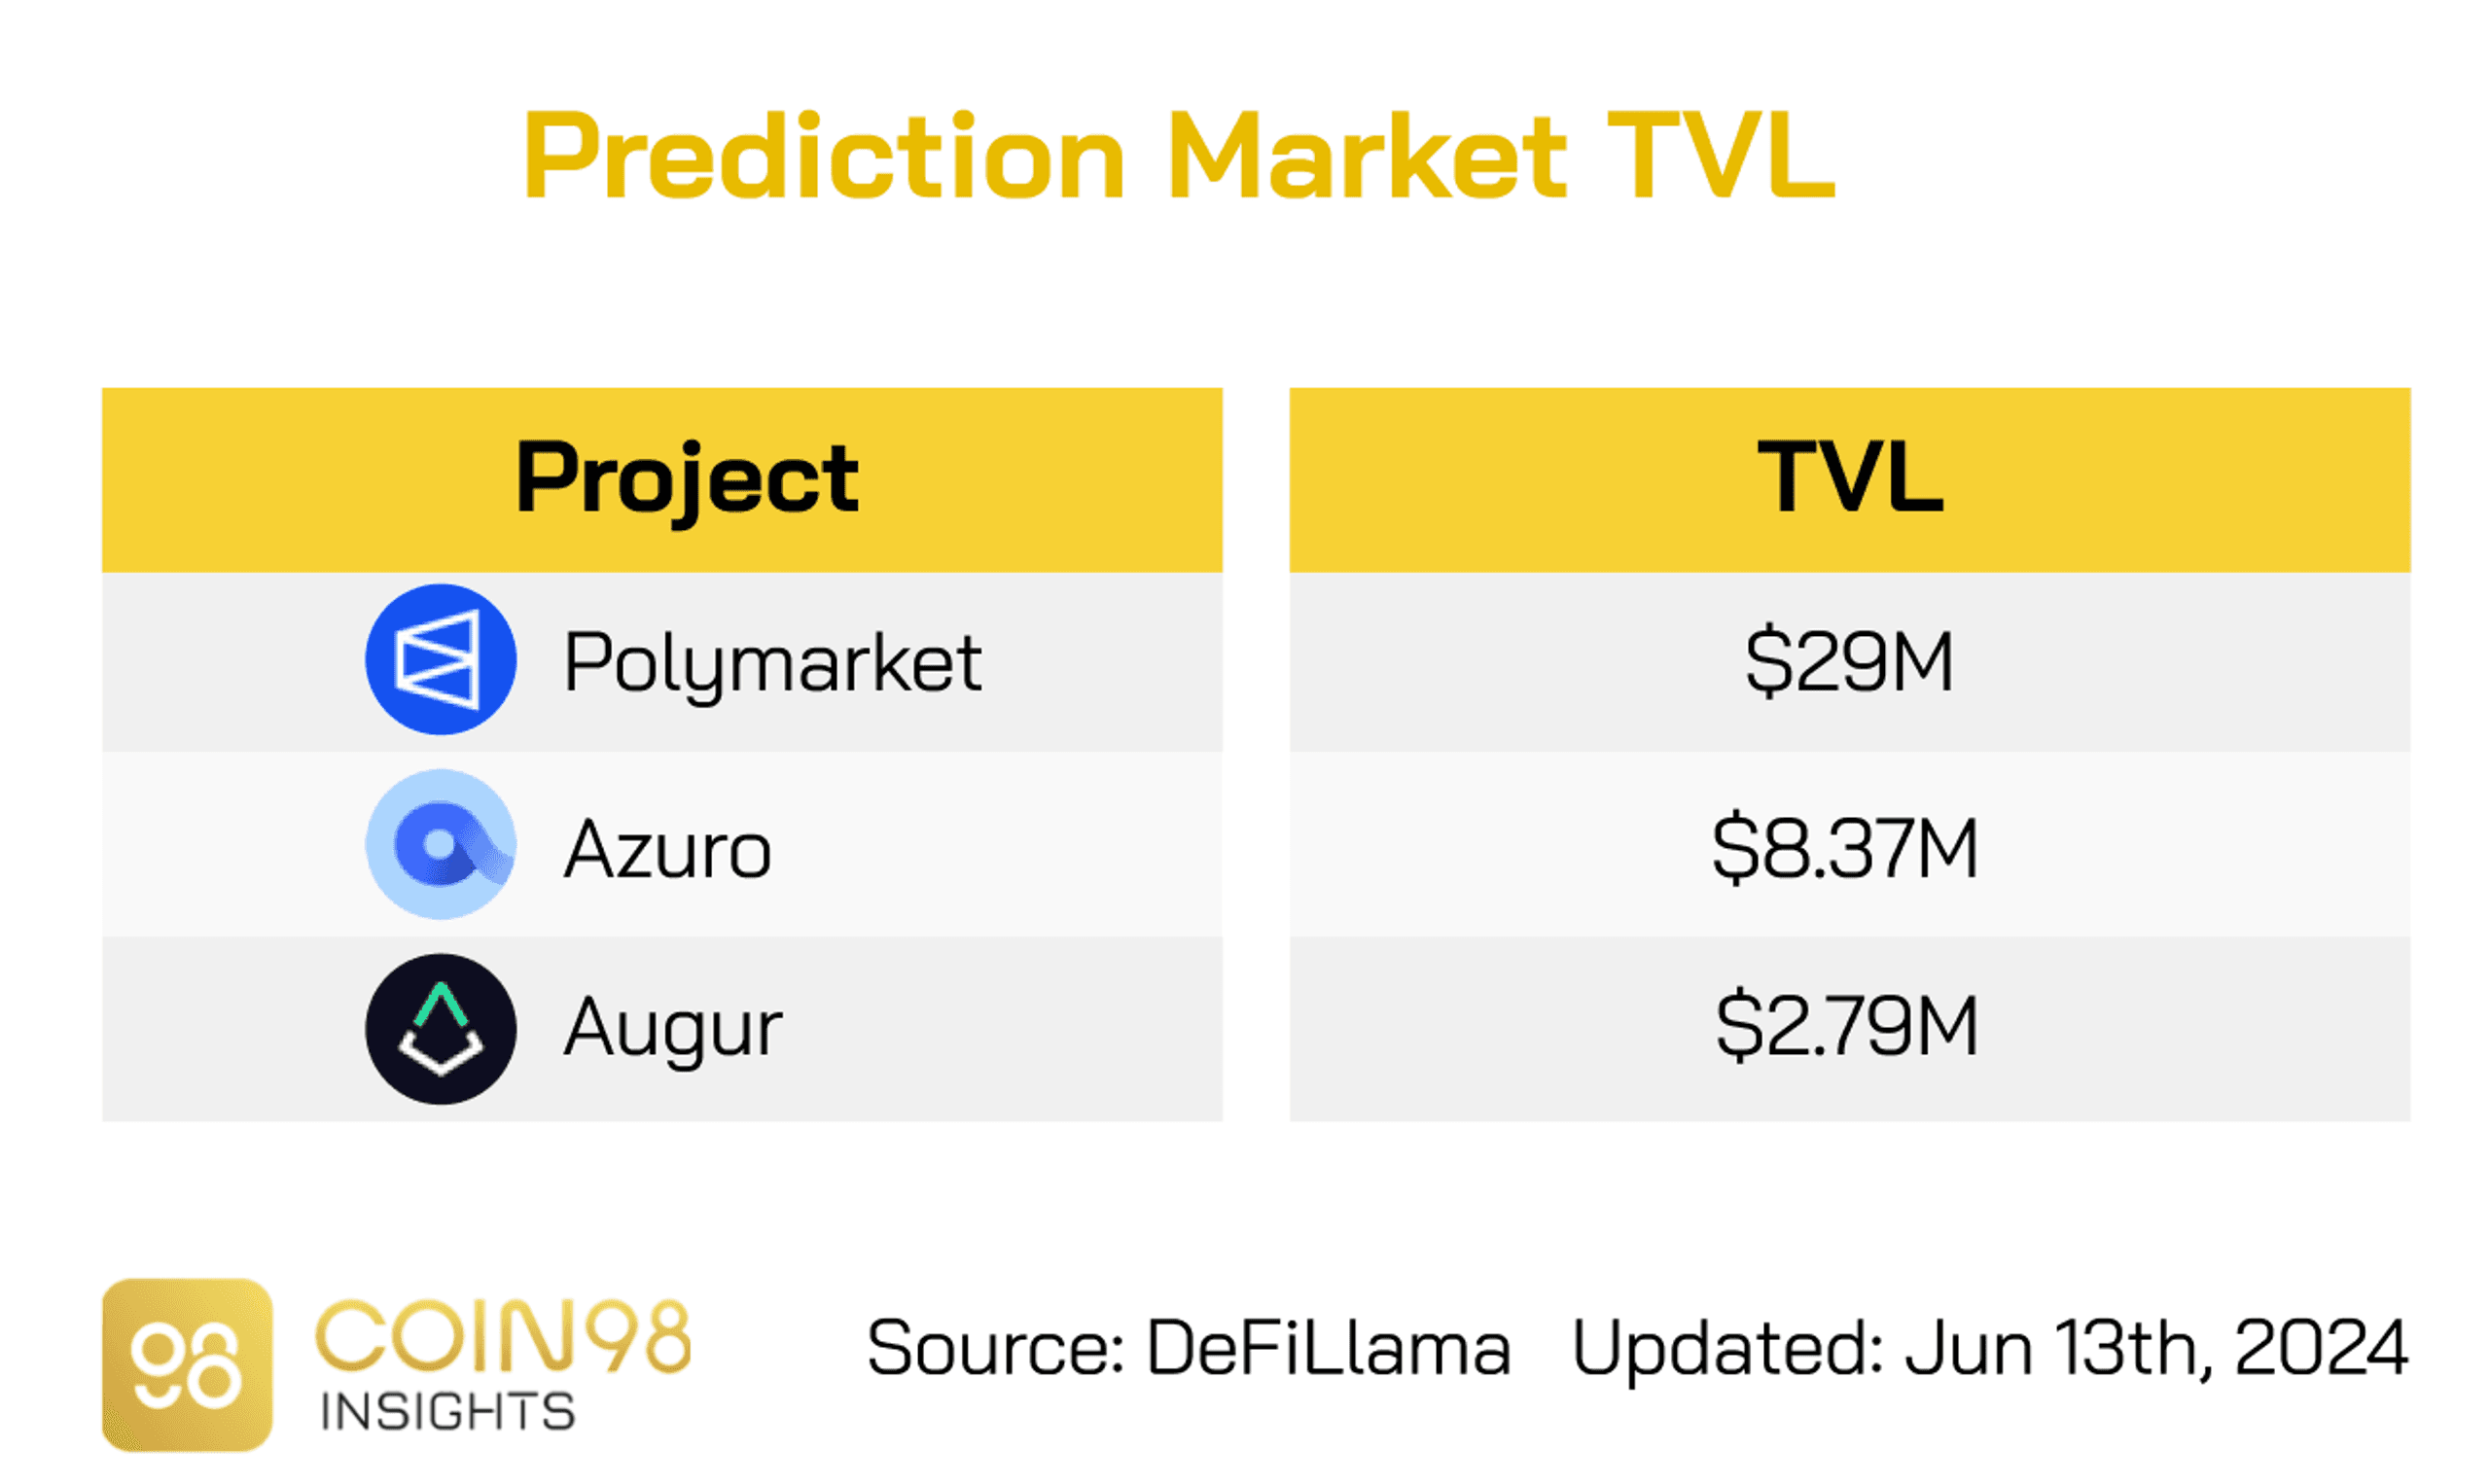 tvl prediction market